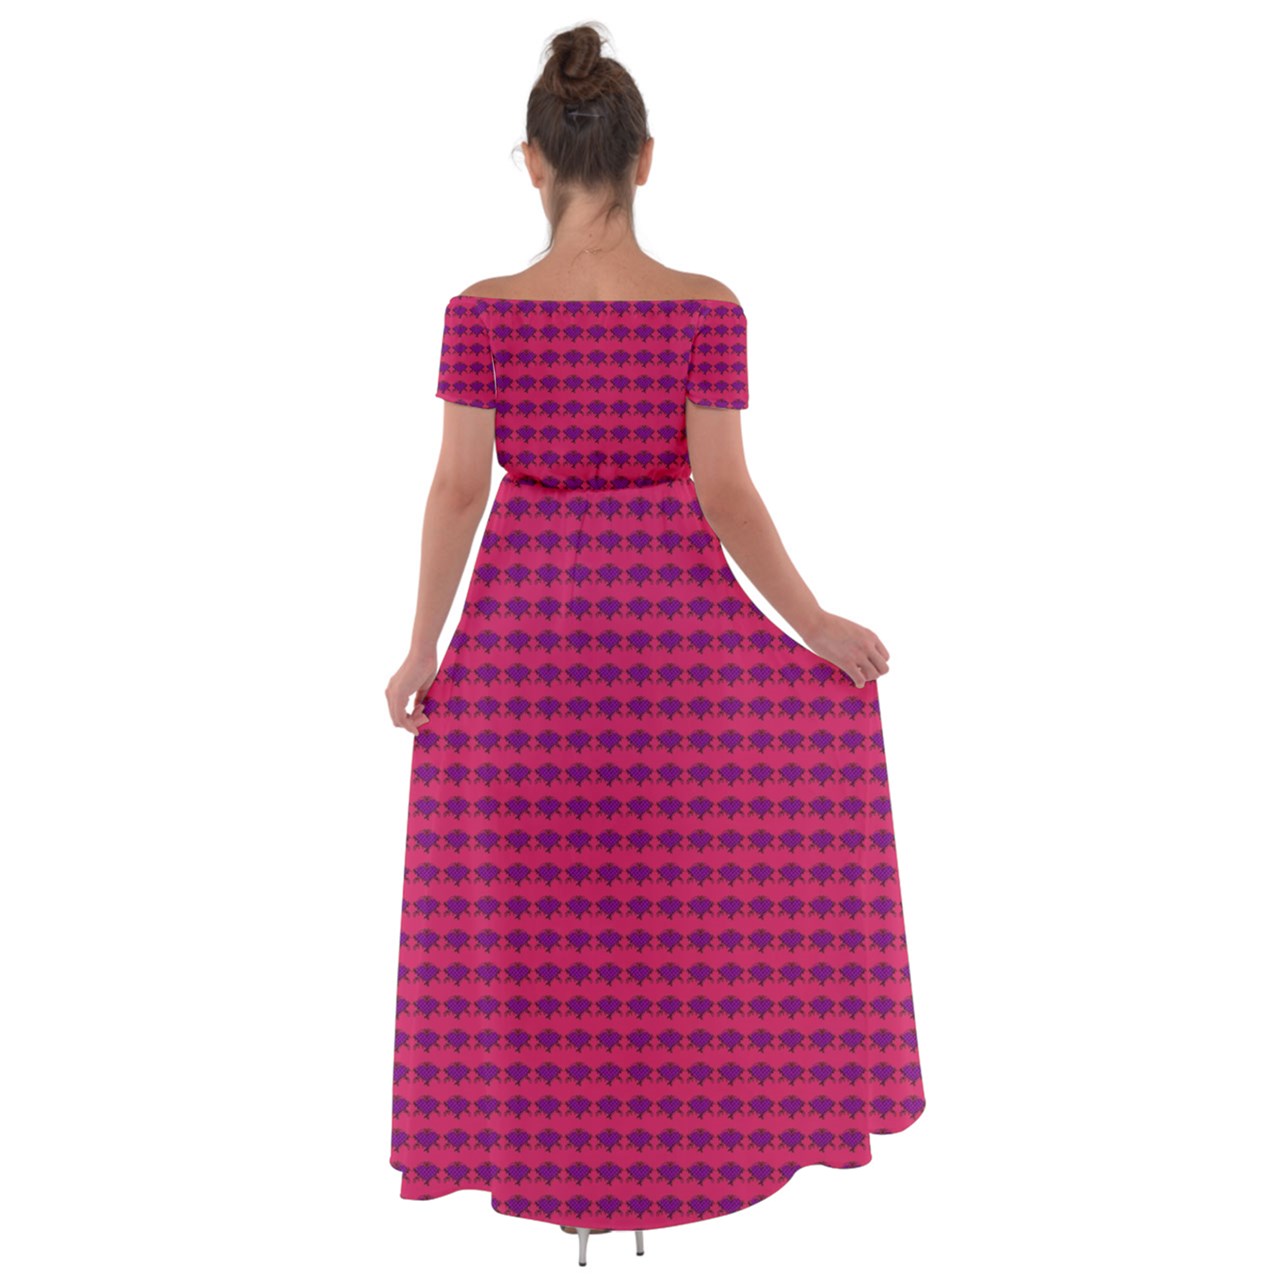 Fuchia Lace Tile Off Shoulder Open Front Chiffon Dress